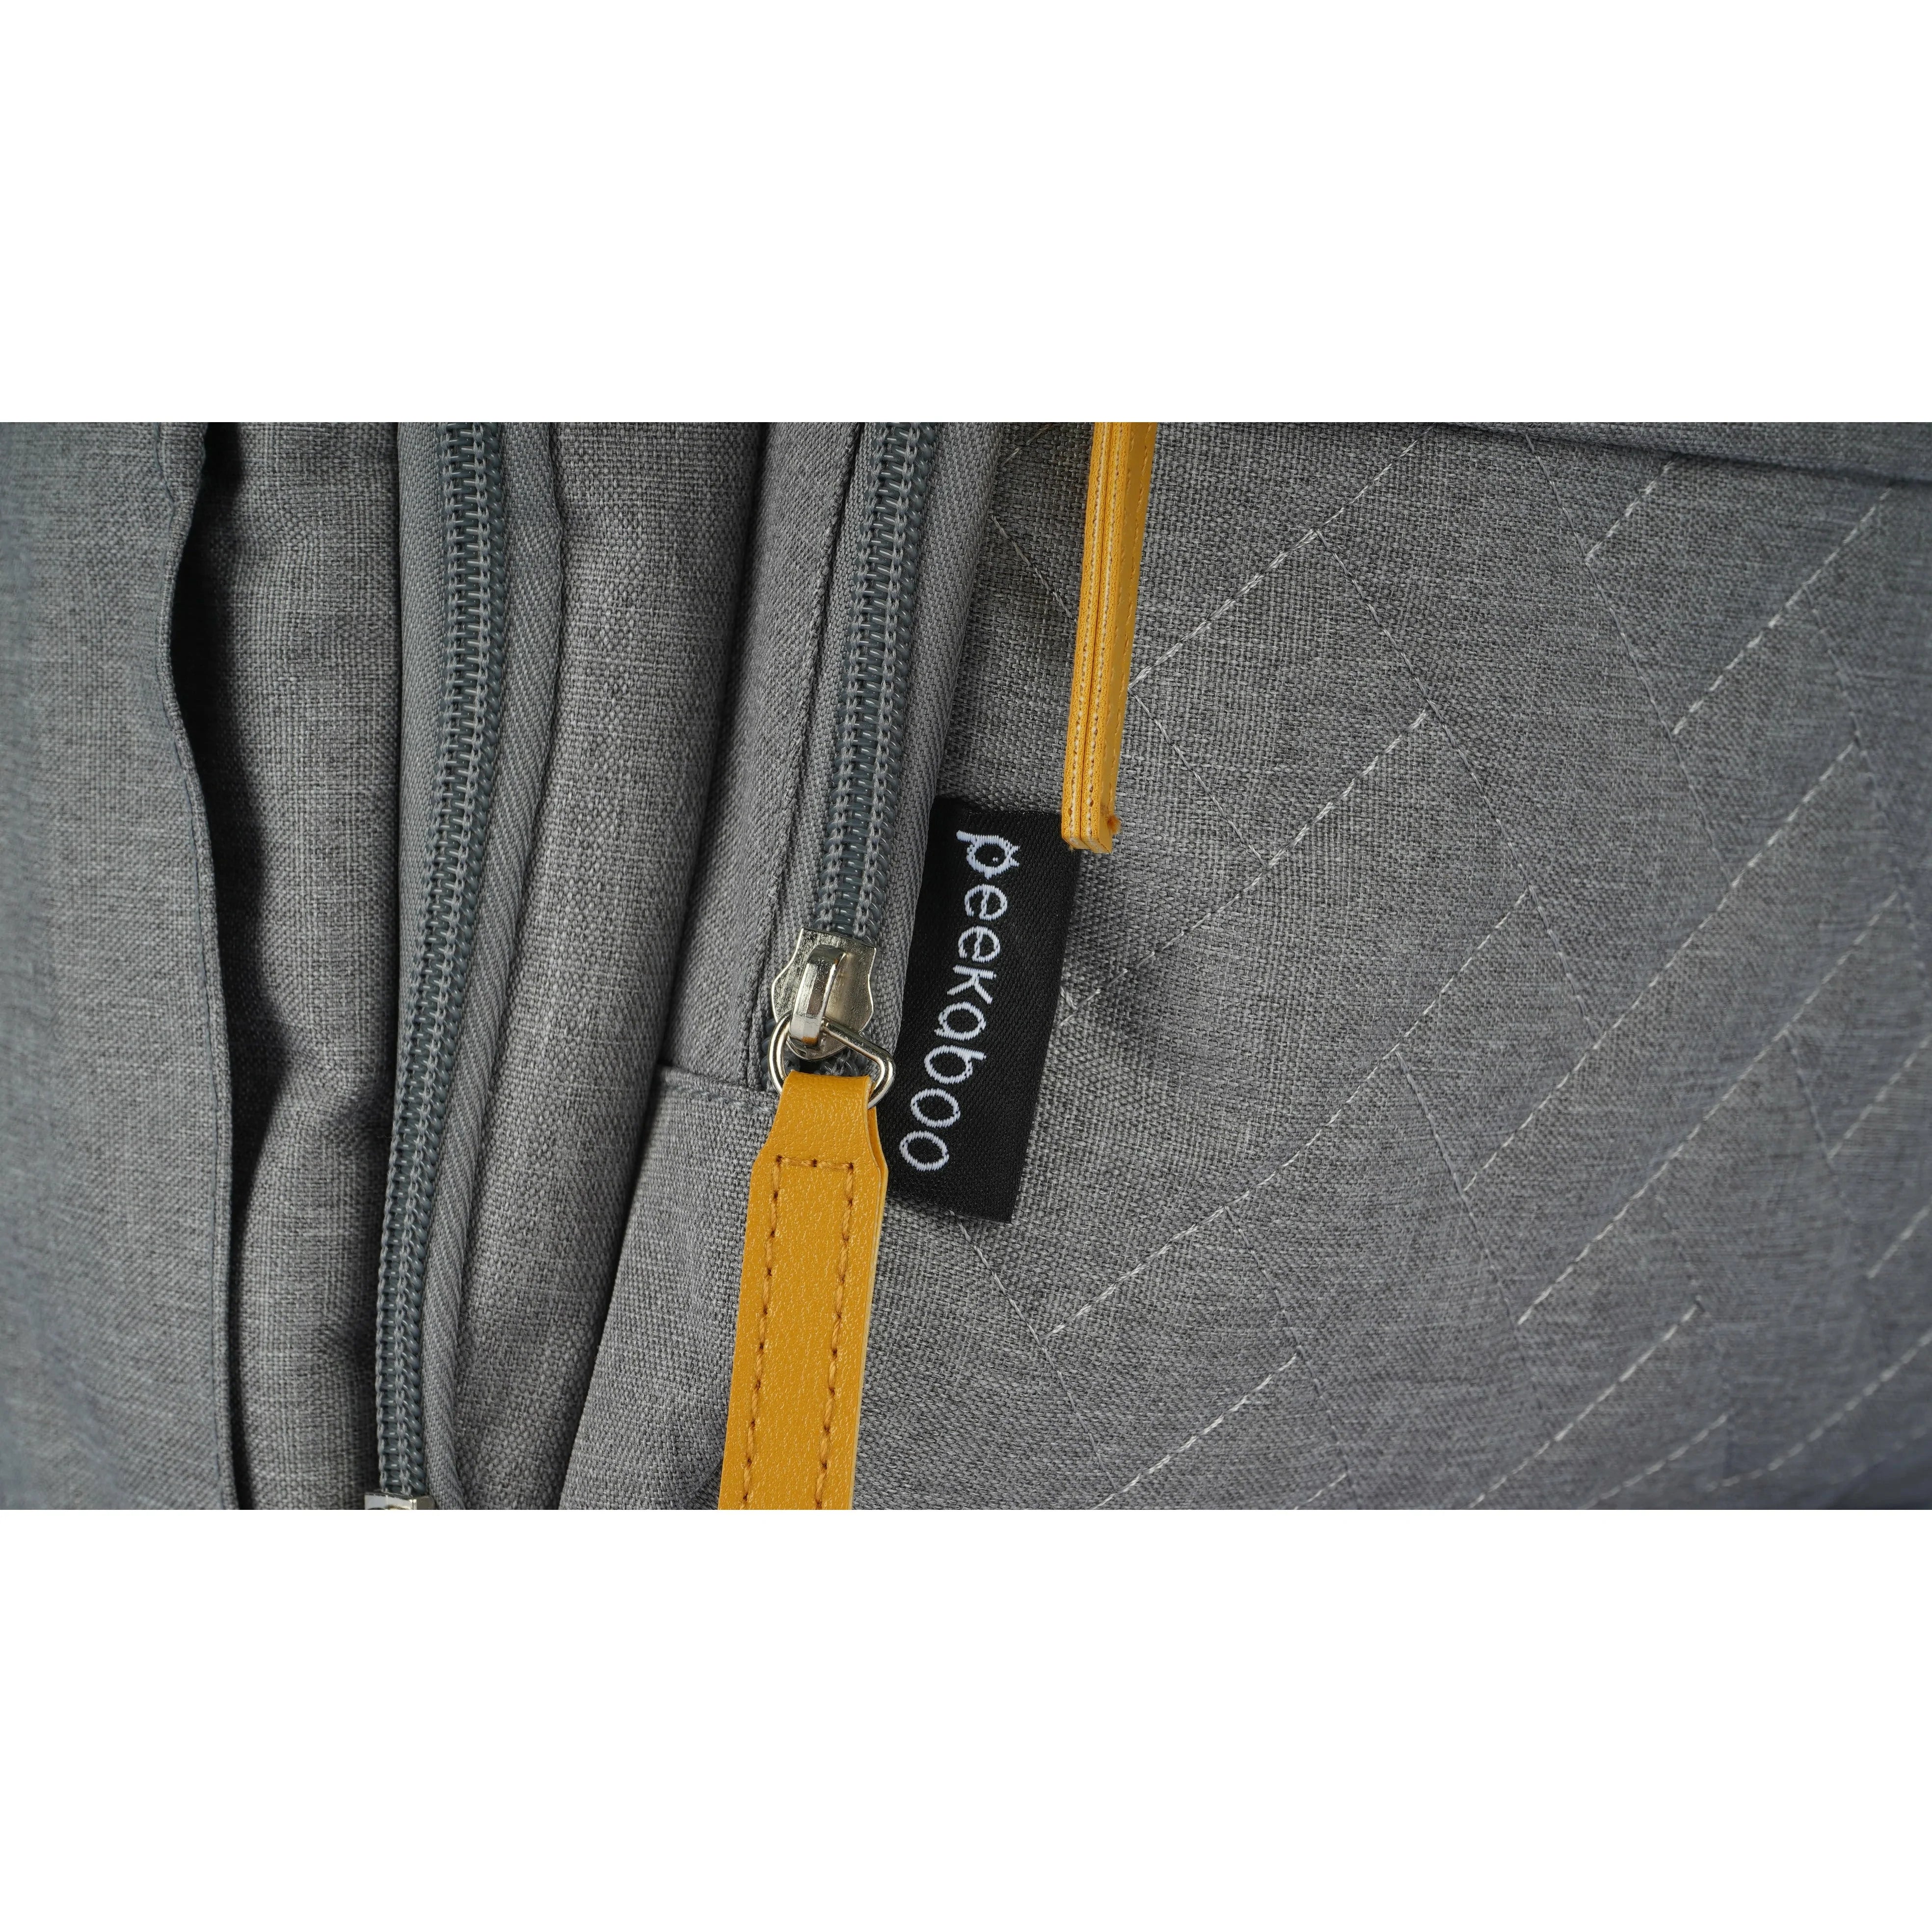 Peekaboo Multiutility Diaper Bag/ Backpack with Pacifier Case Grey